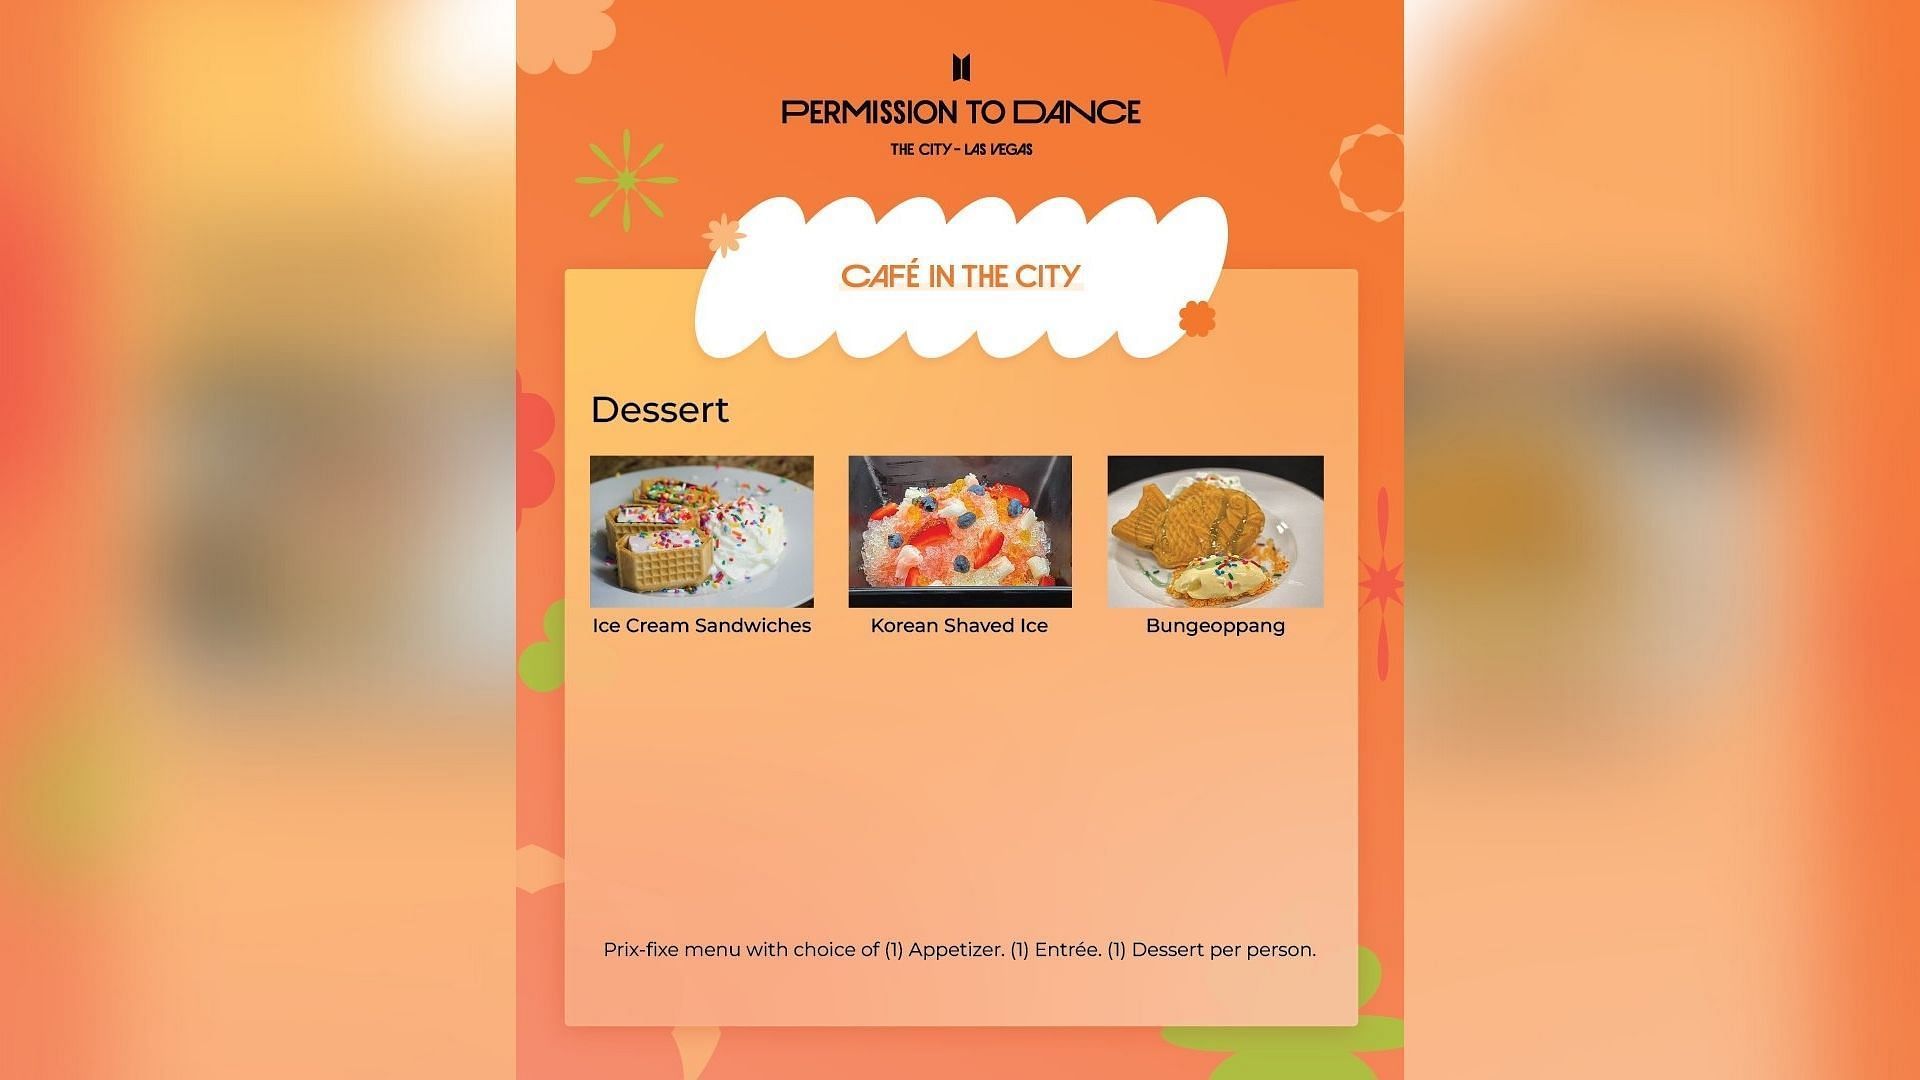 PTD Las Vegas cafe meals menu at Mandalay Bay (Image via @MandalayBay/Twitter)